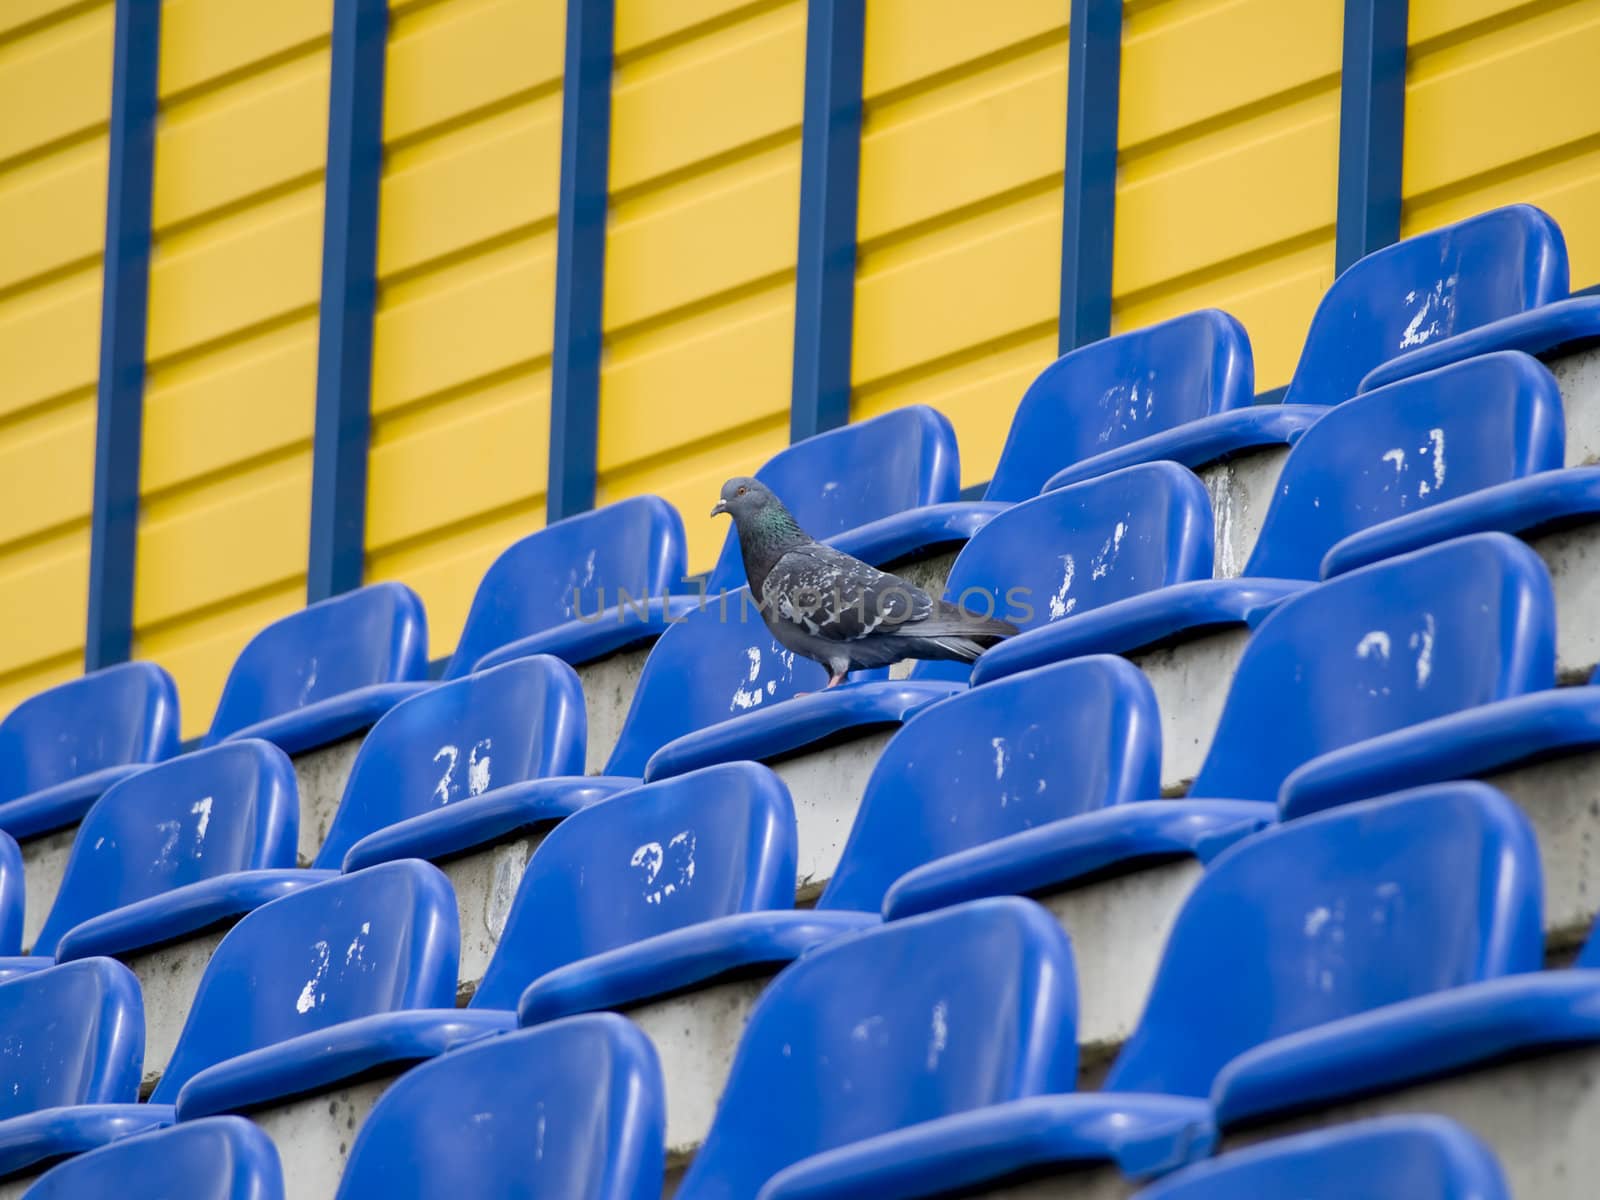 Single grey dove at the empty seats of the stadium